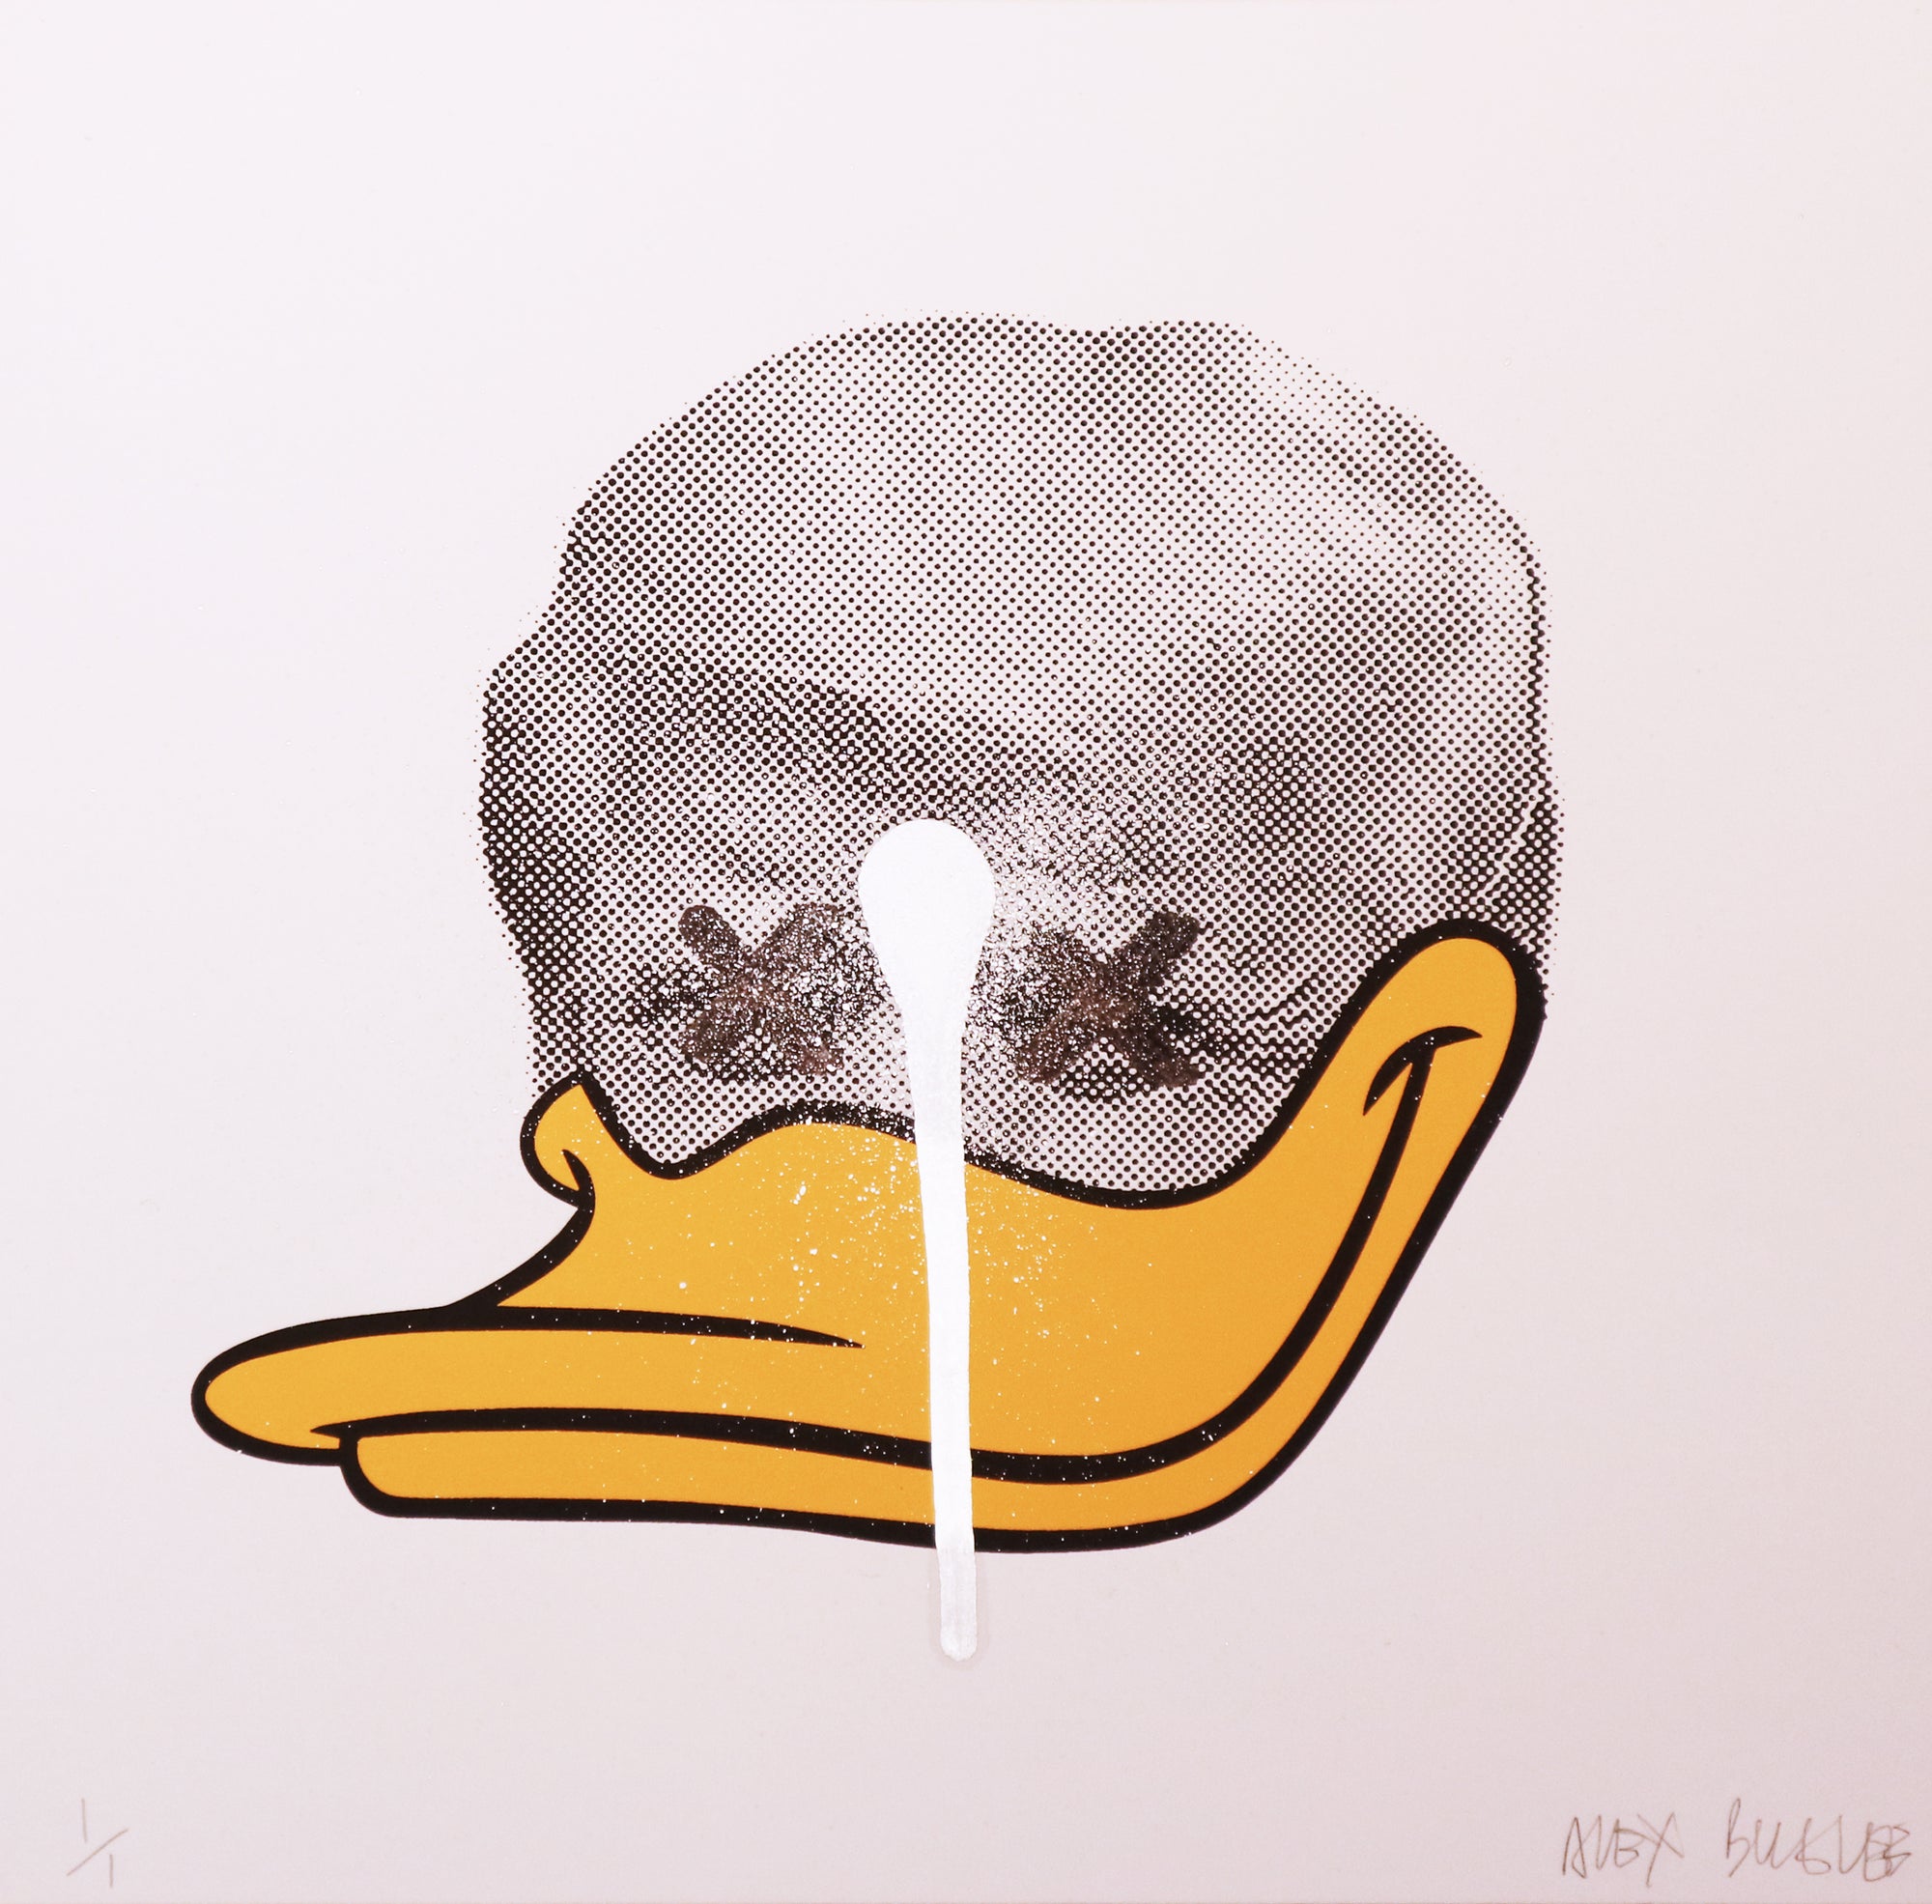 Alex Bucklee - Dead Donald